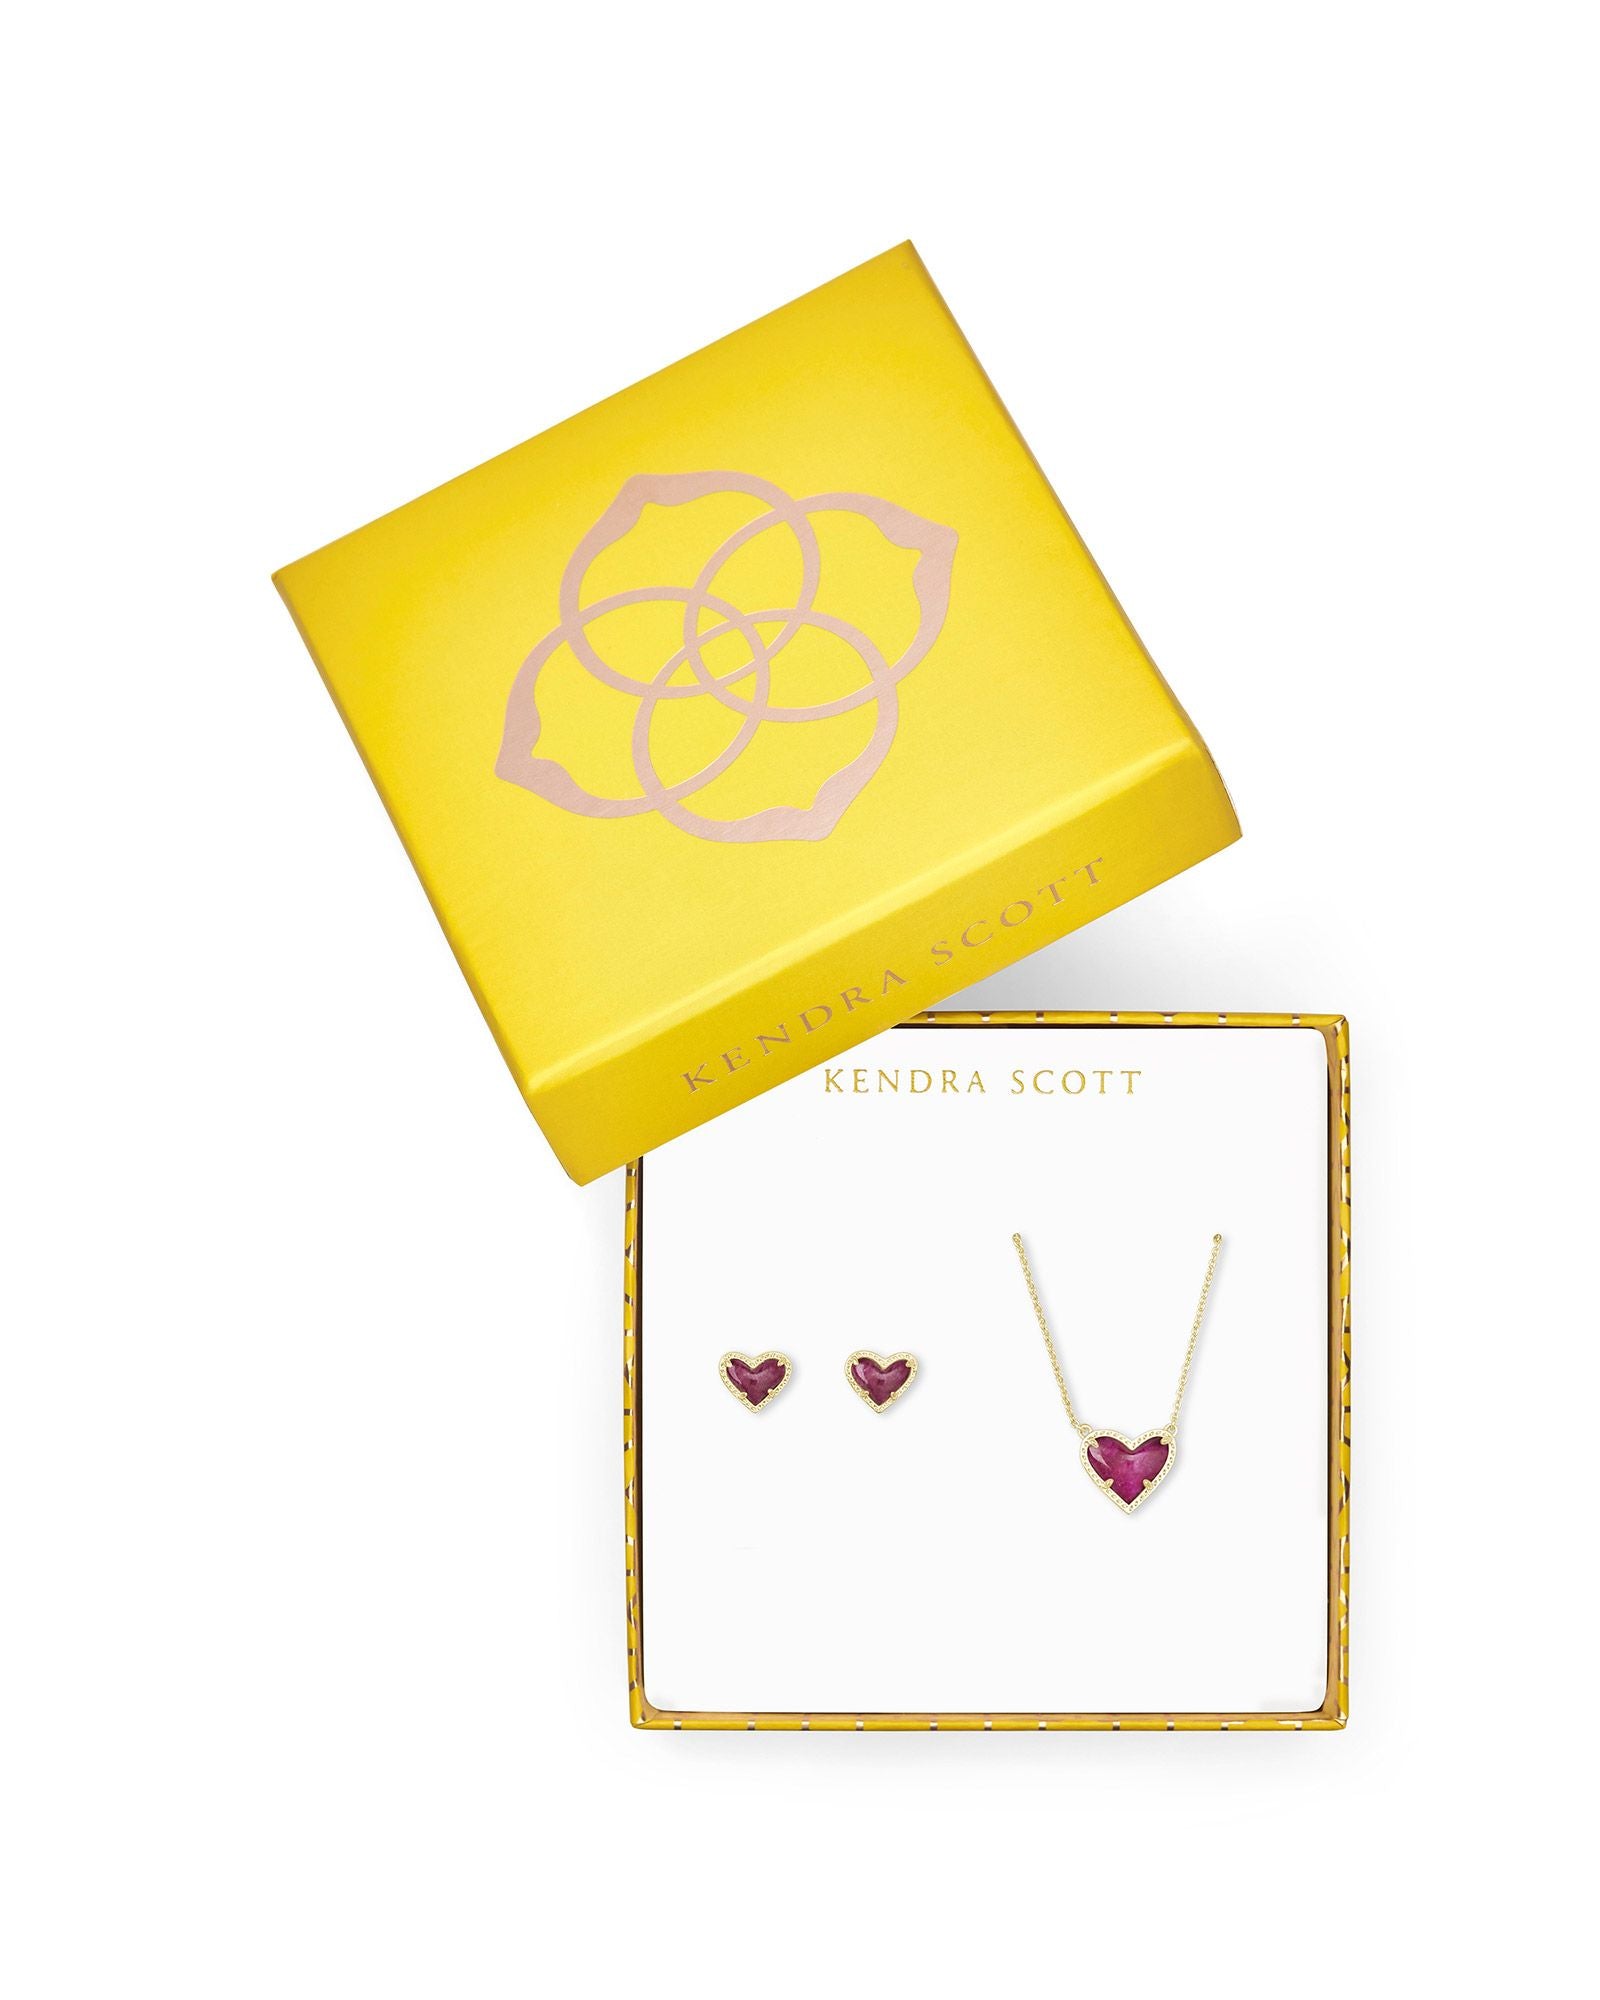 Gift Set Ari Heart Pendant & Stud Earring - Raspberry Labrodite